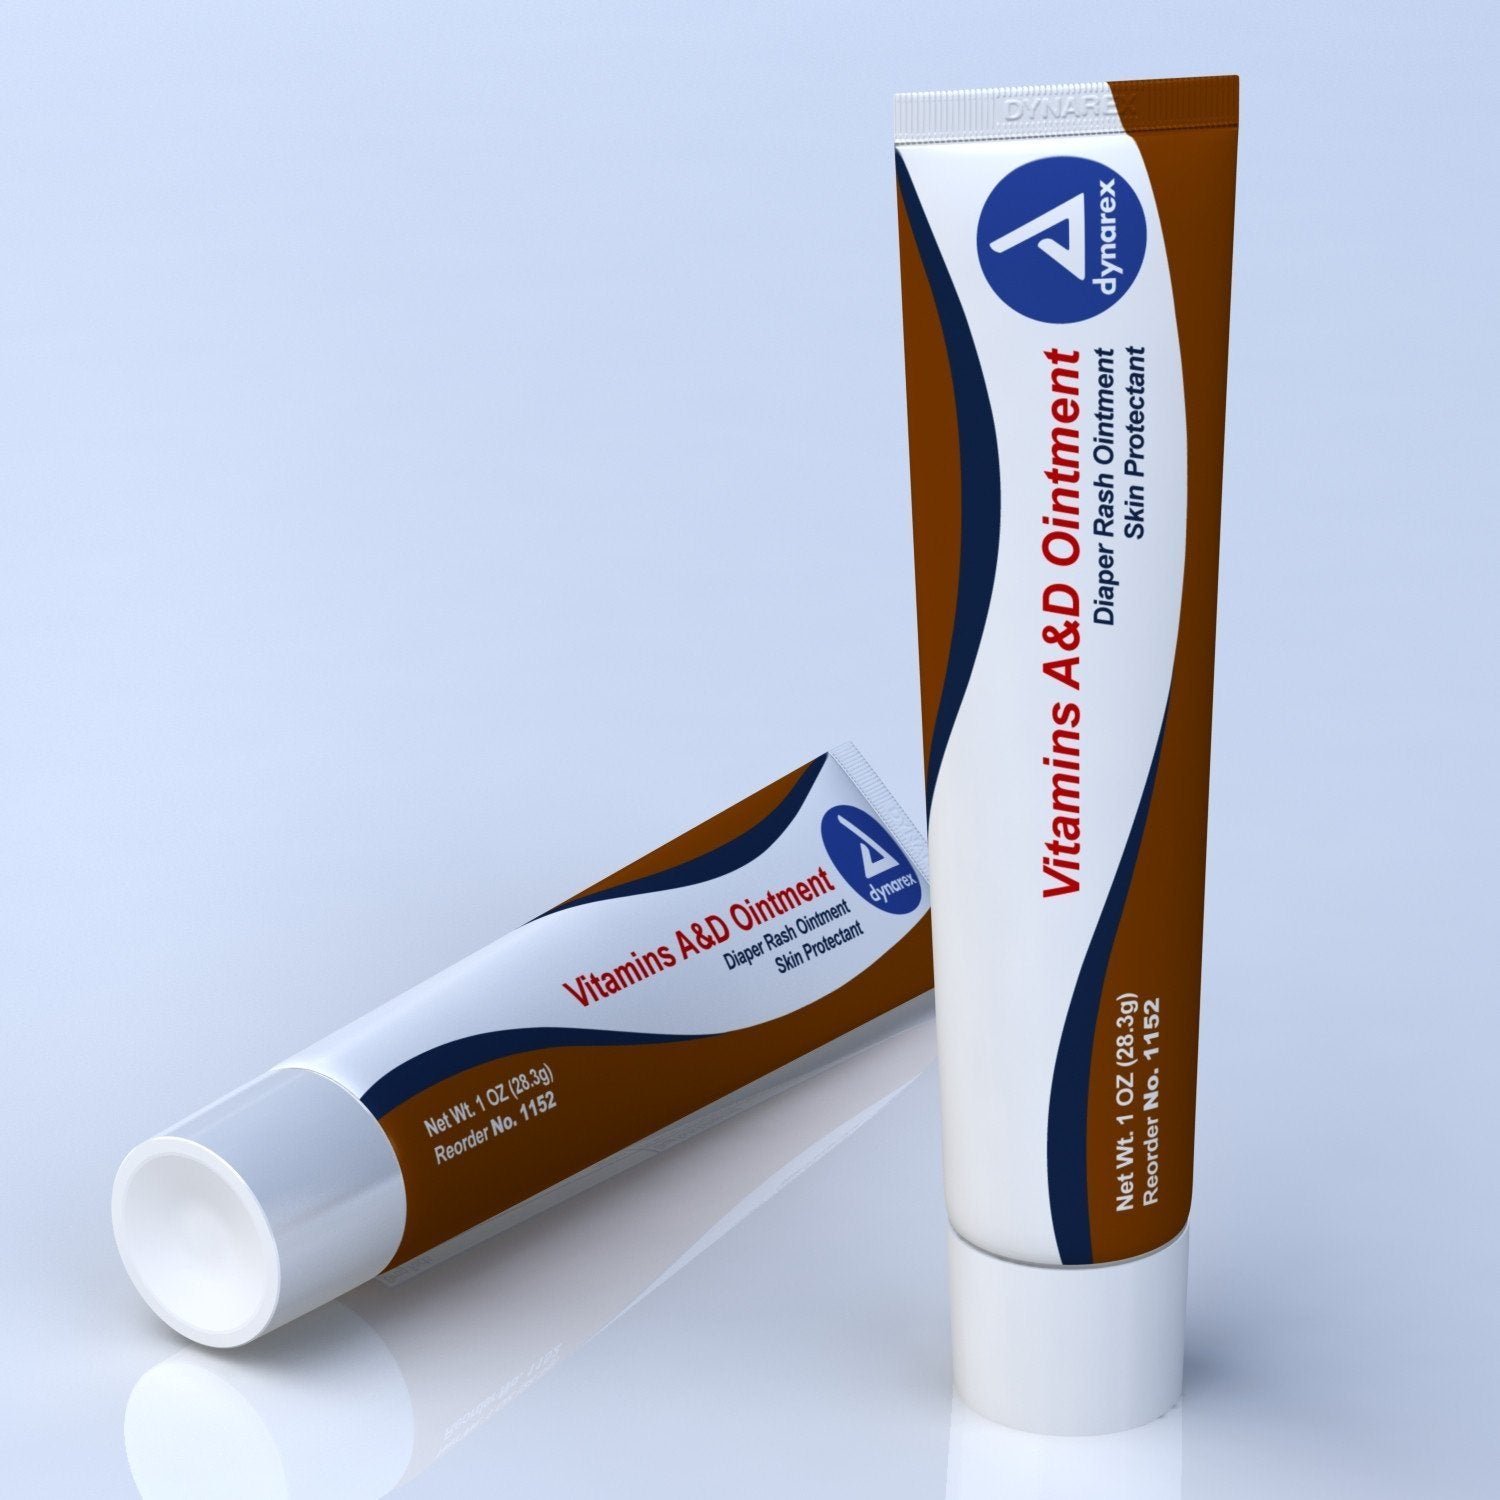 A&D Diaper Rash Ointment & Skin Protectant Original, 4 oz x 2 tubes  300850096025